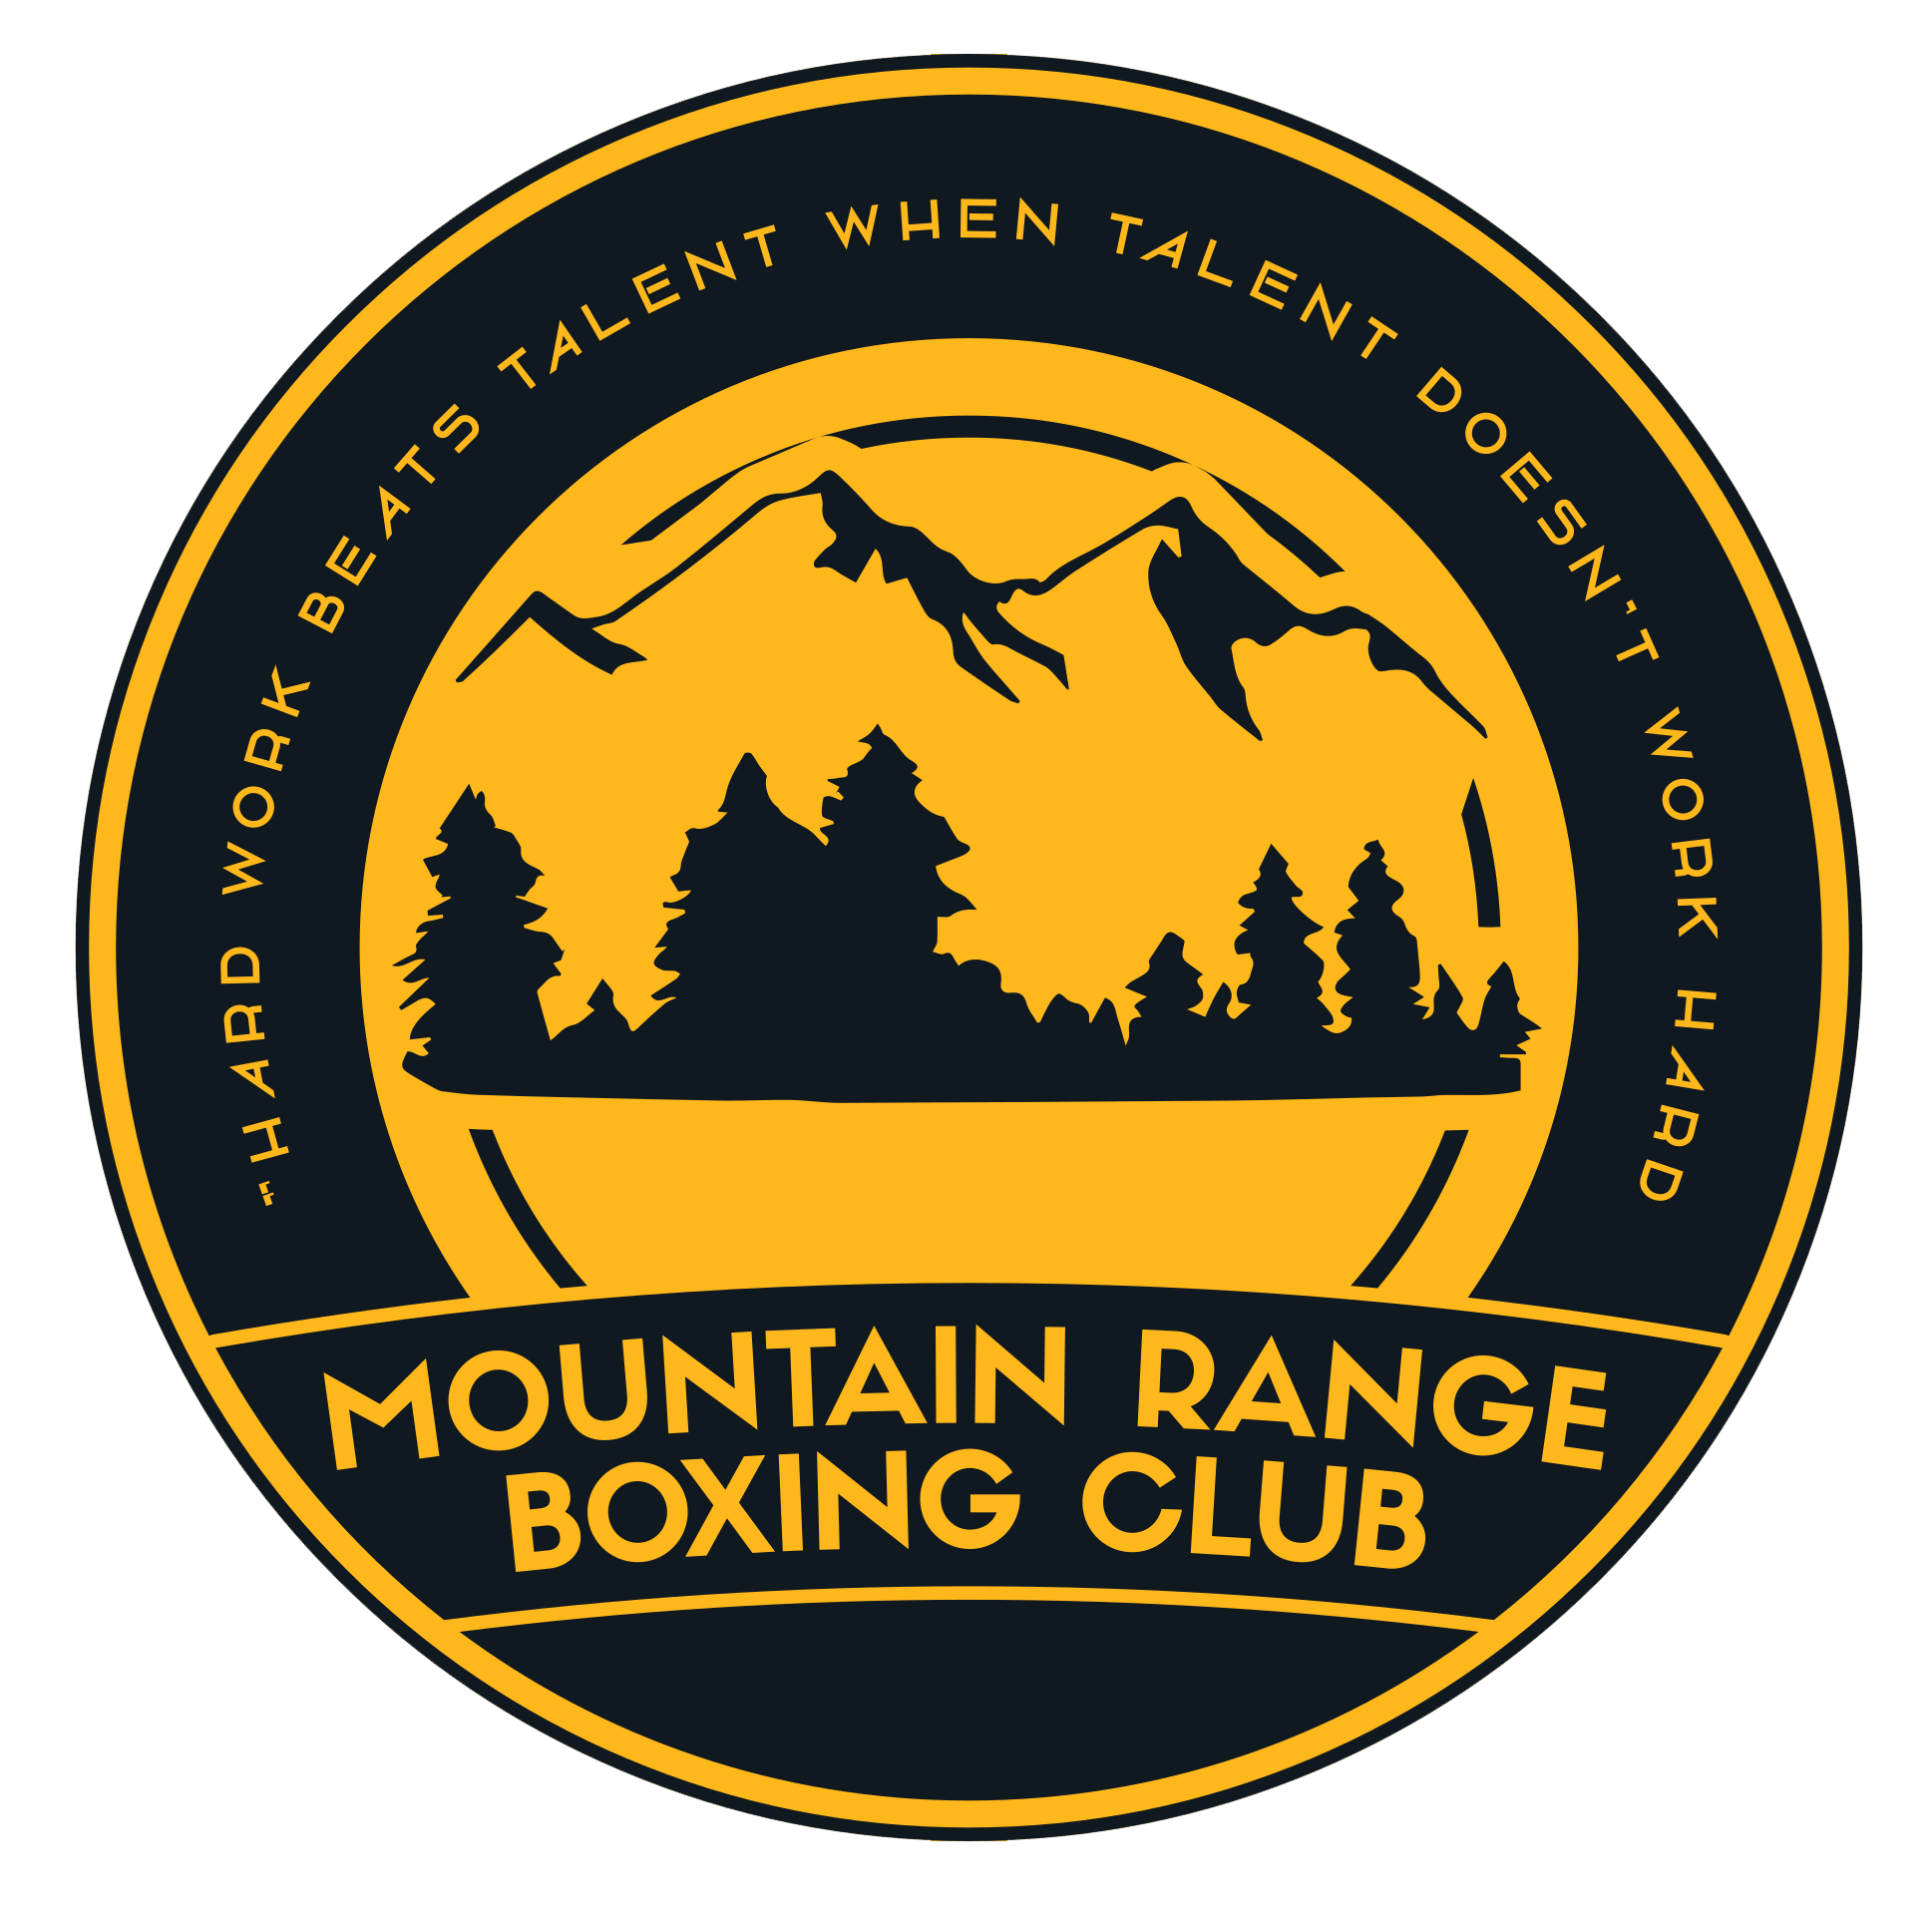 MOUNTAIN RANGE BOXING CLUB